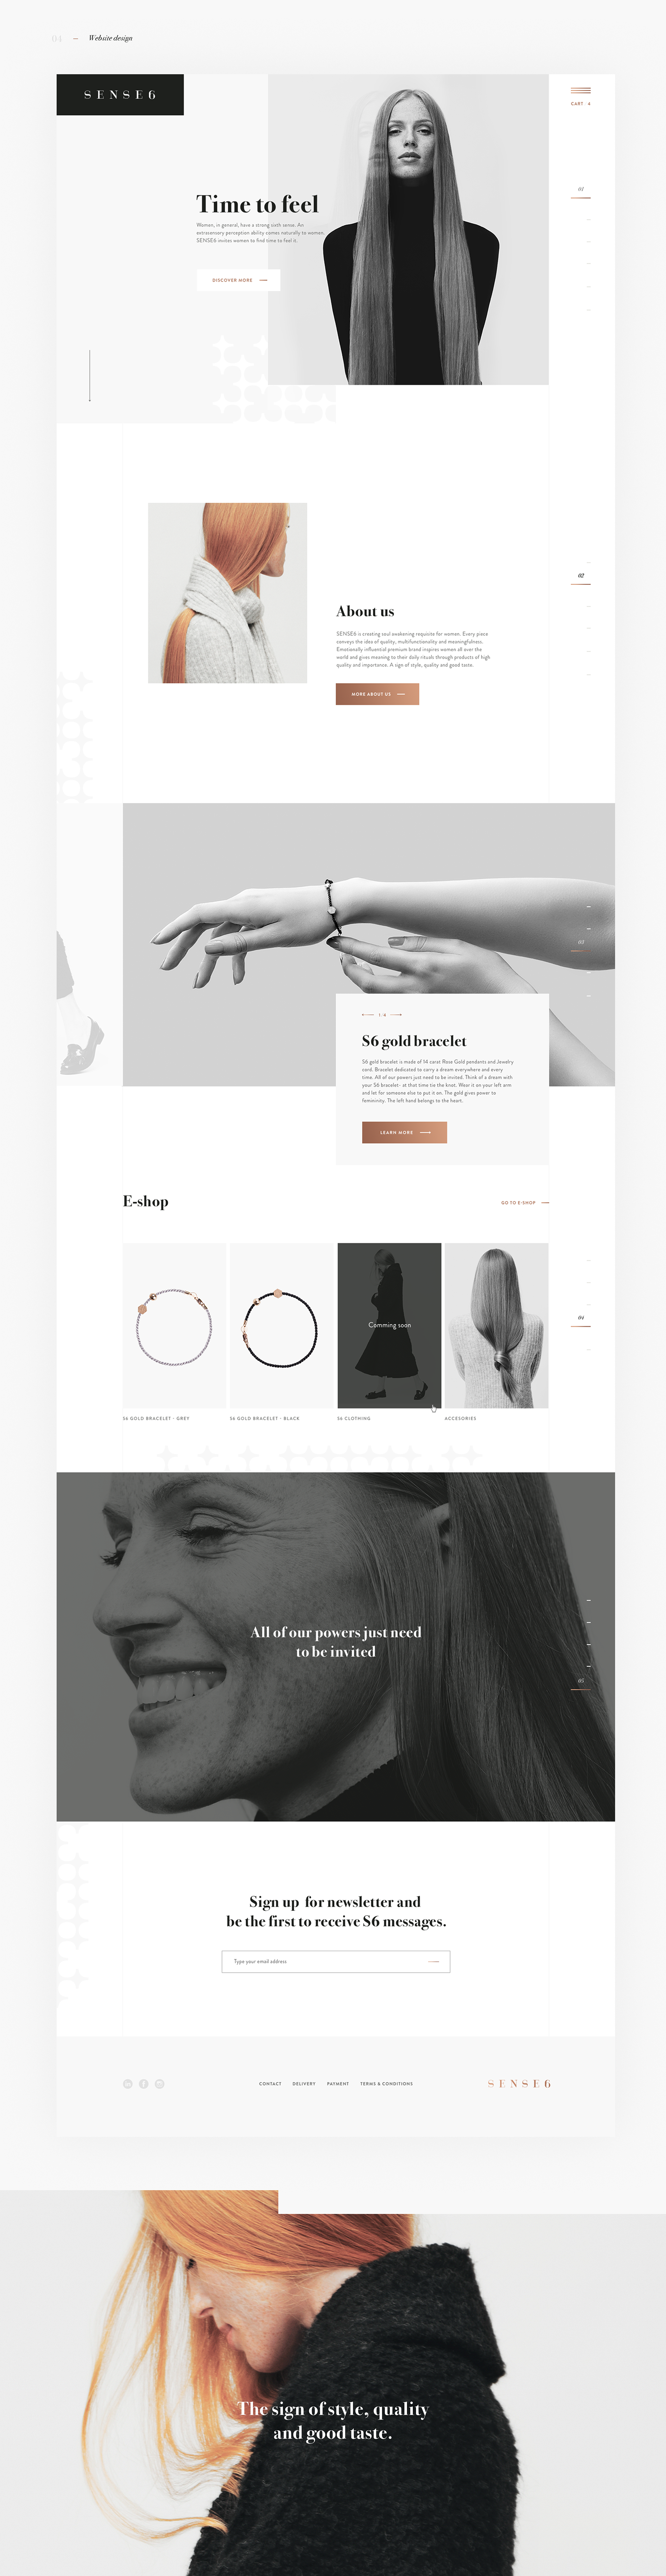 Web Design: Sense6 Fashion Website Design